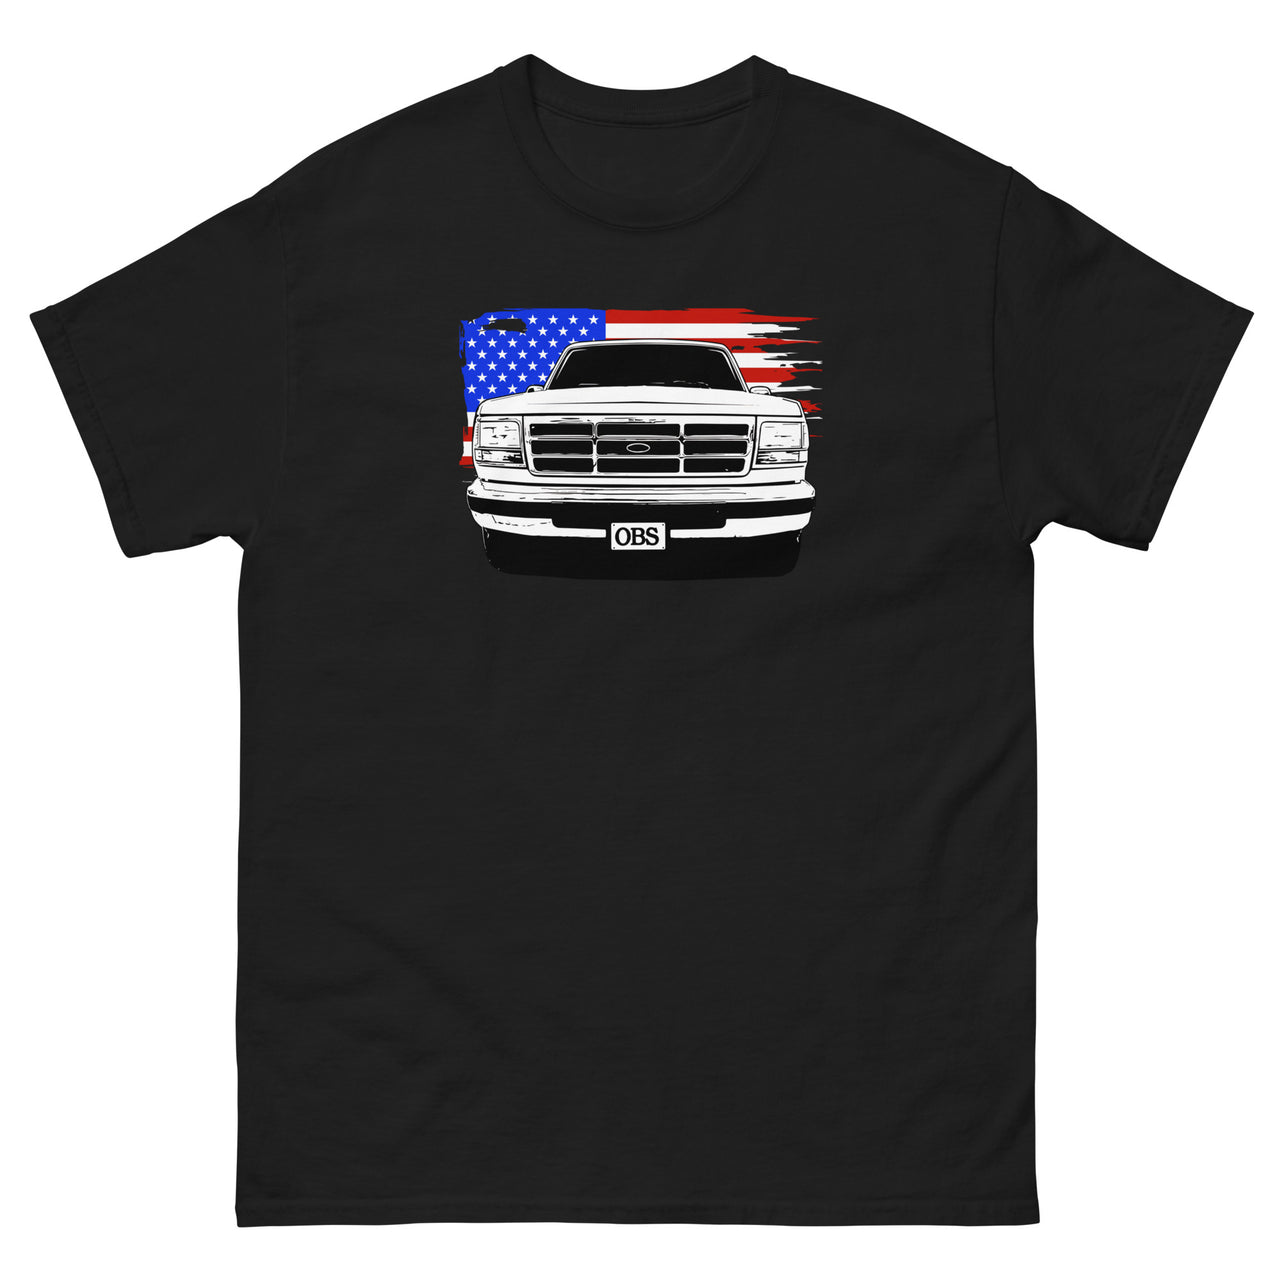 OBS Truck American Flag T-Shirt in black